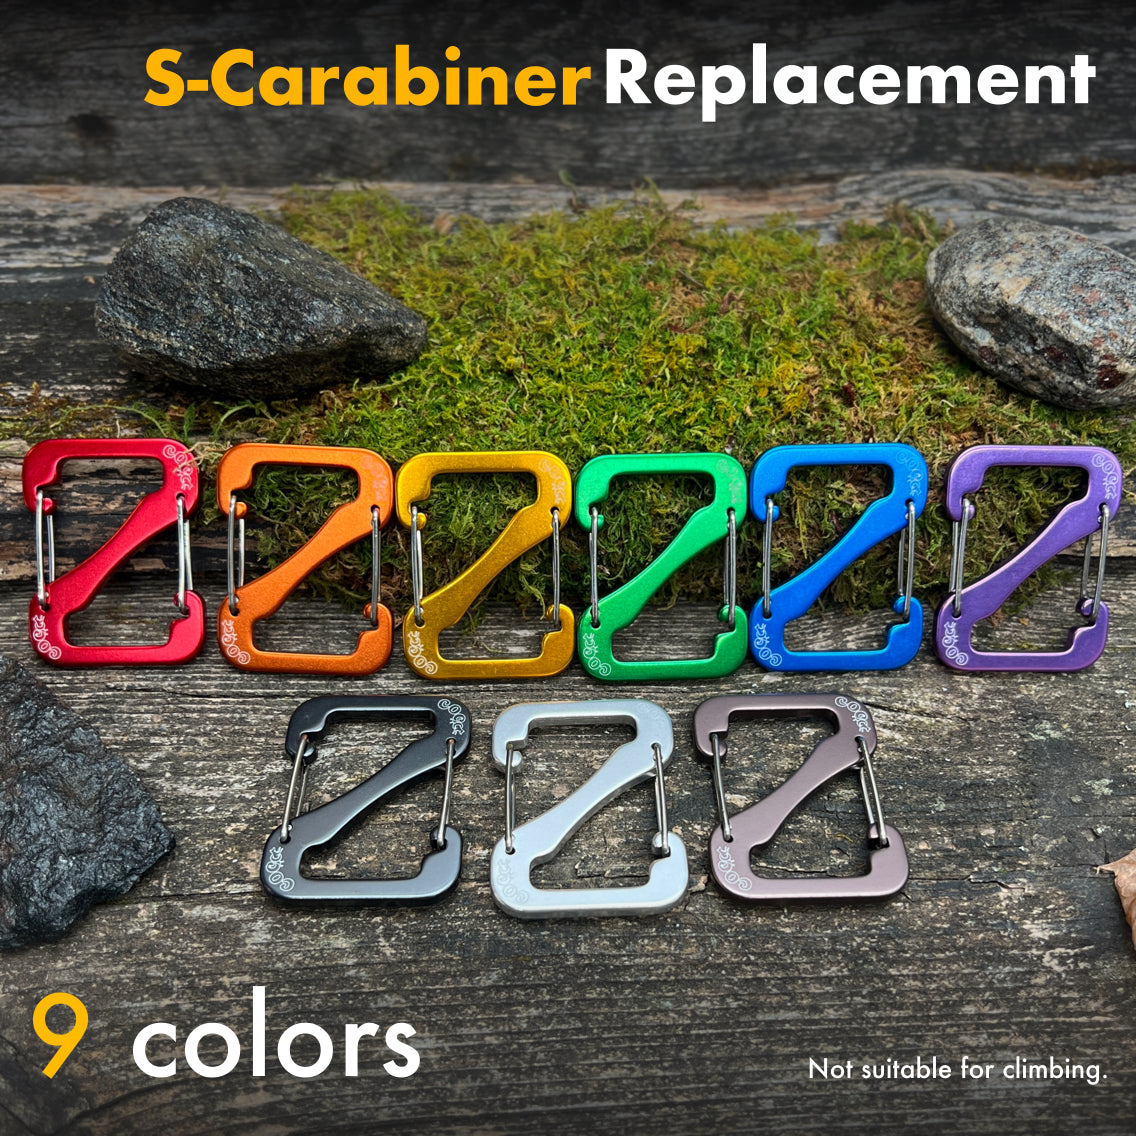 S-Carabiner Replacement